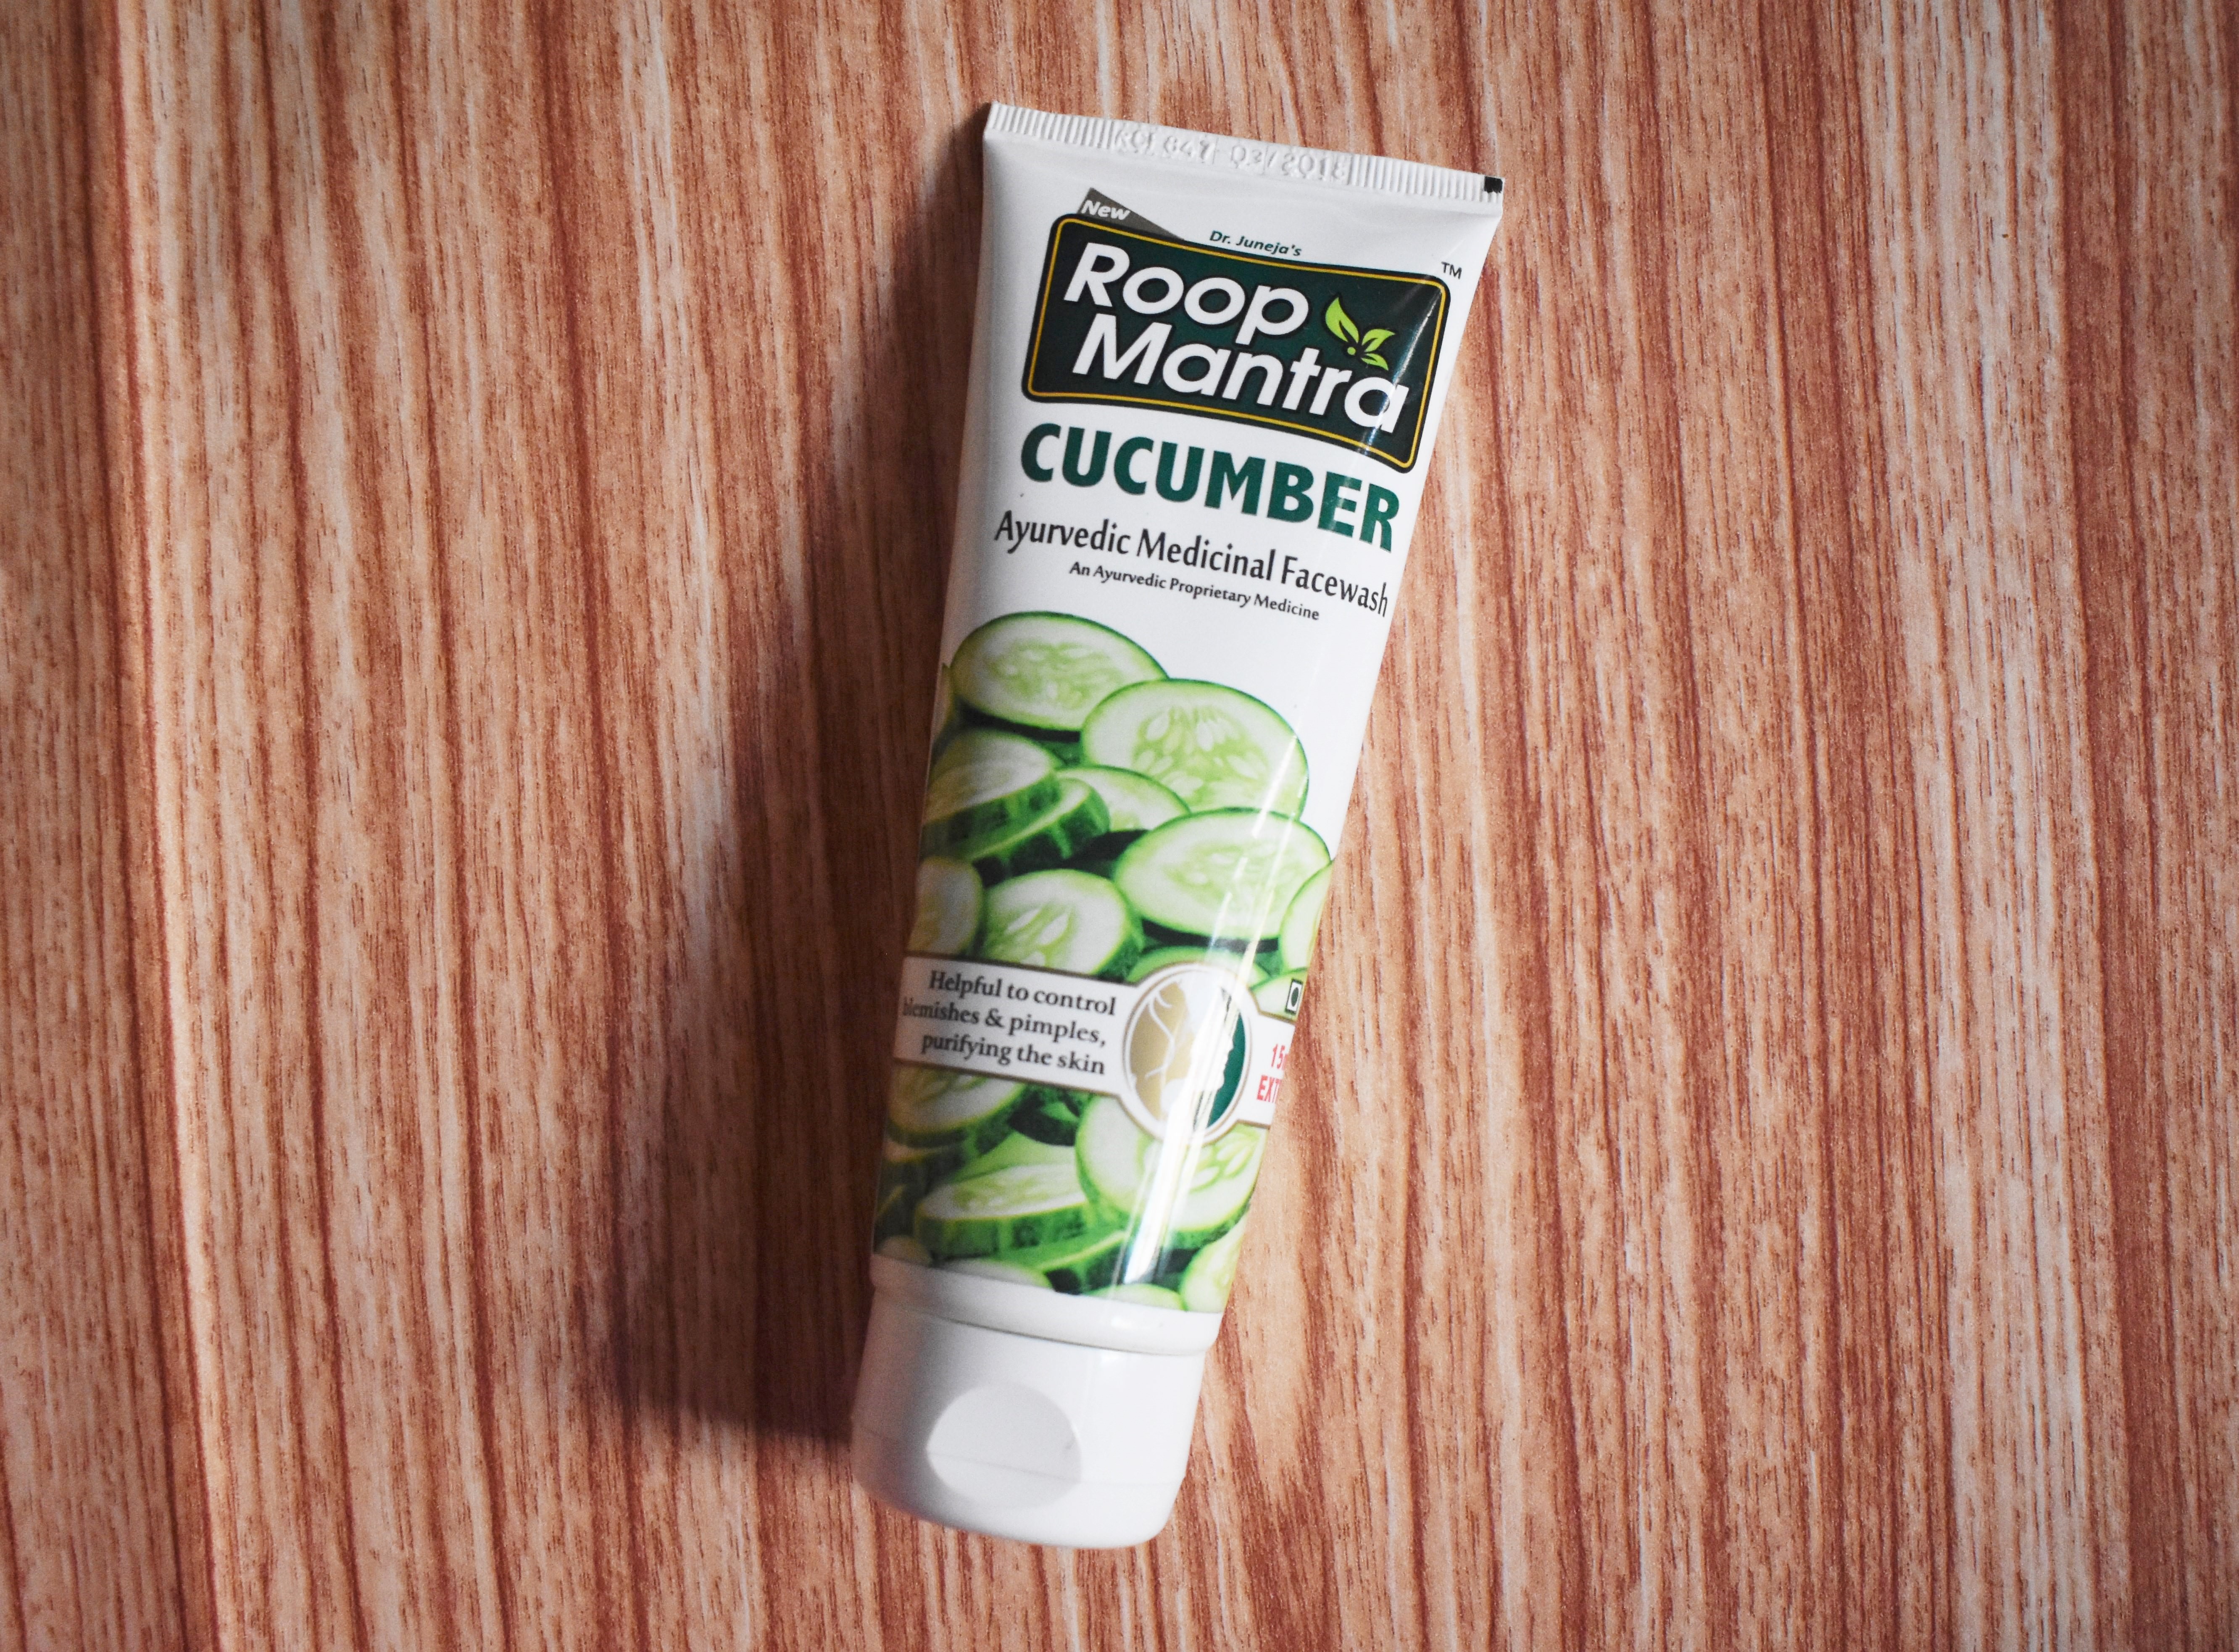 Roop Mantra Ayurvedic Medicinal Face Wash Review cucumber